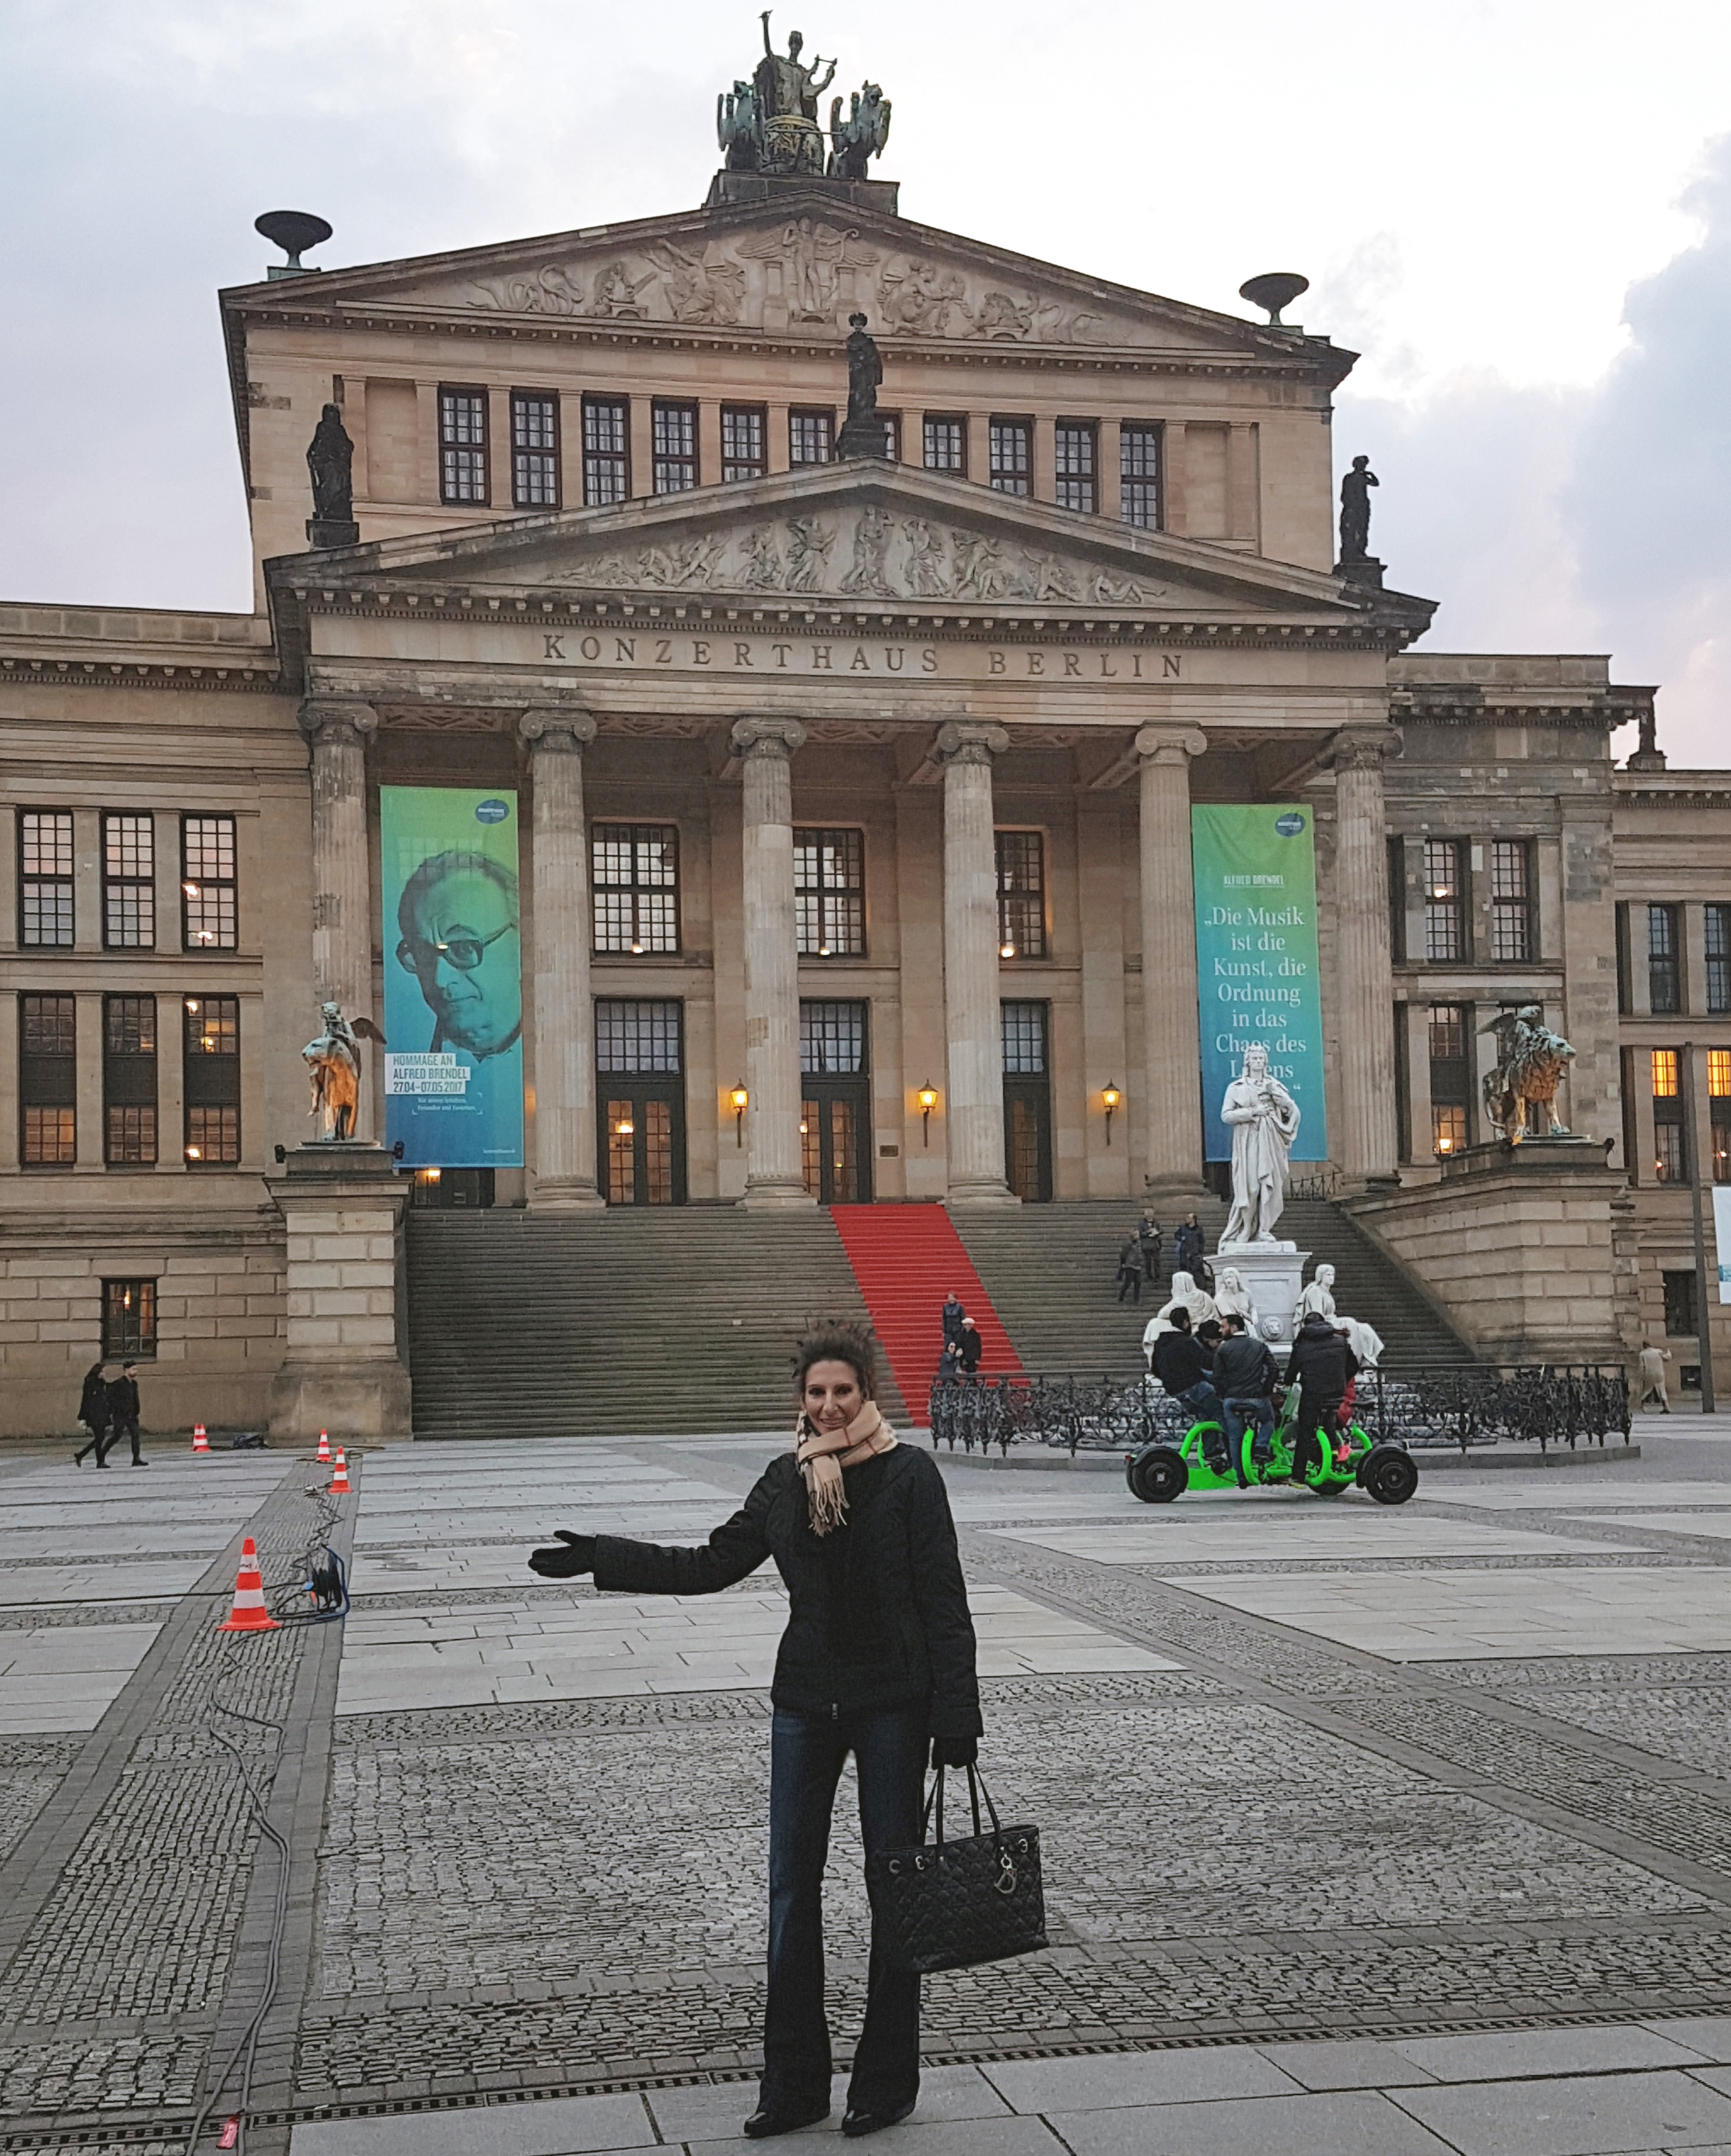 Lucia Aliberti⚘Konzerthaus Berlin⚘Gendarmenmarkt⚘Concert⚘Berlin⚘:http://www.luciaaliberti.it #luciaaliberti #konzerthaus #berlin #gendarmenmarkt #concert